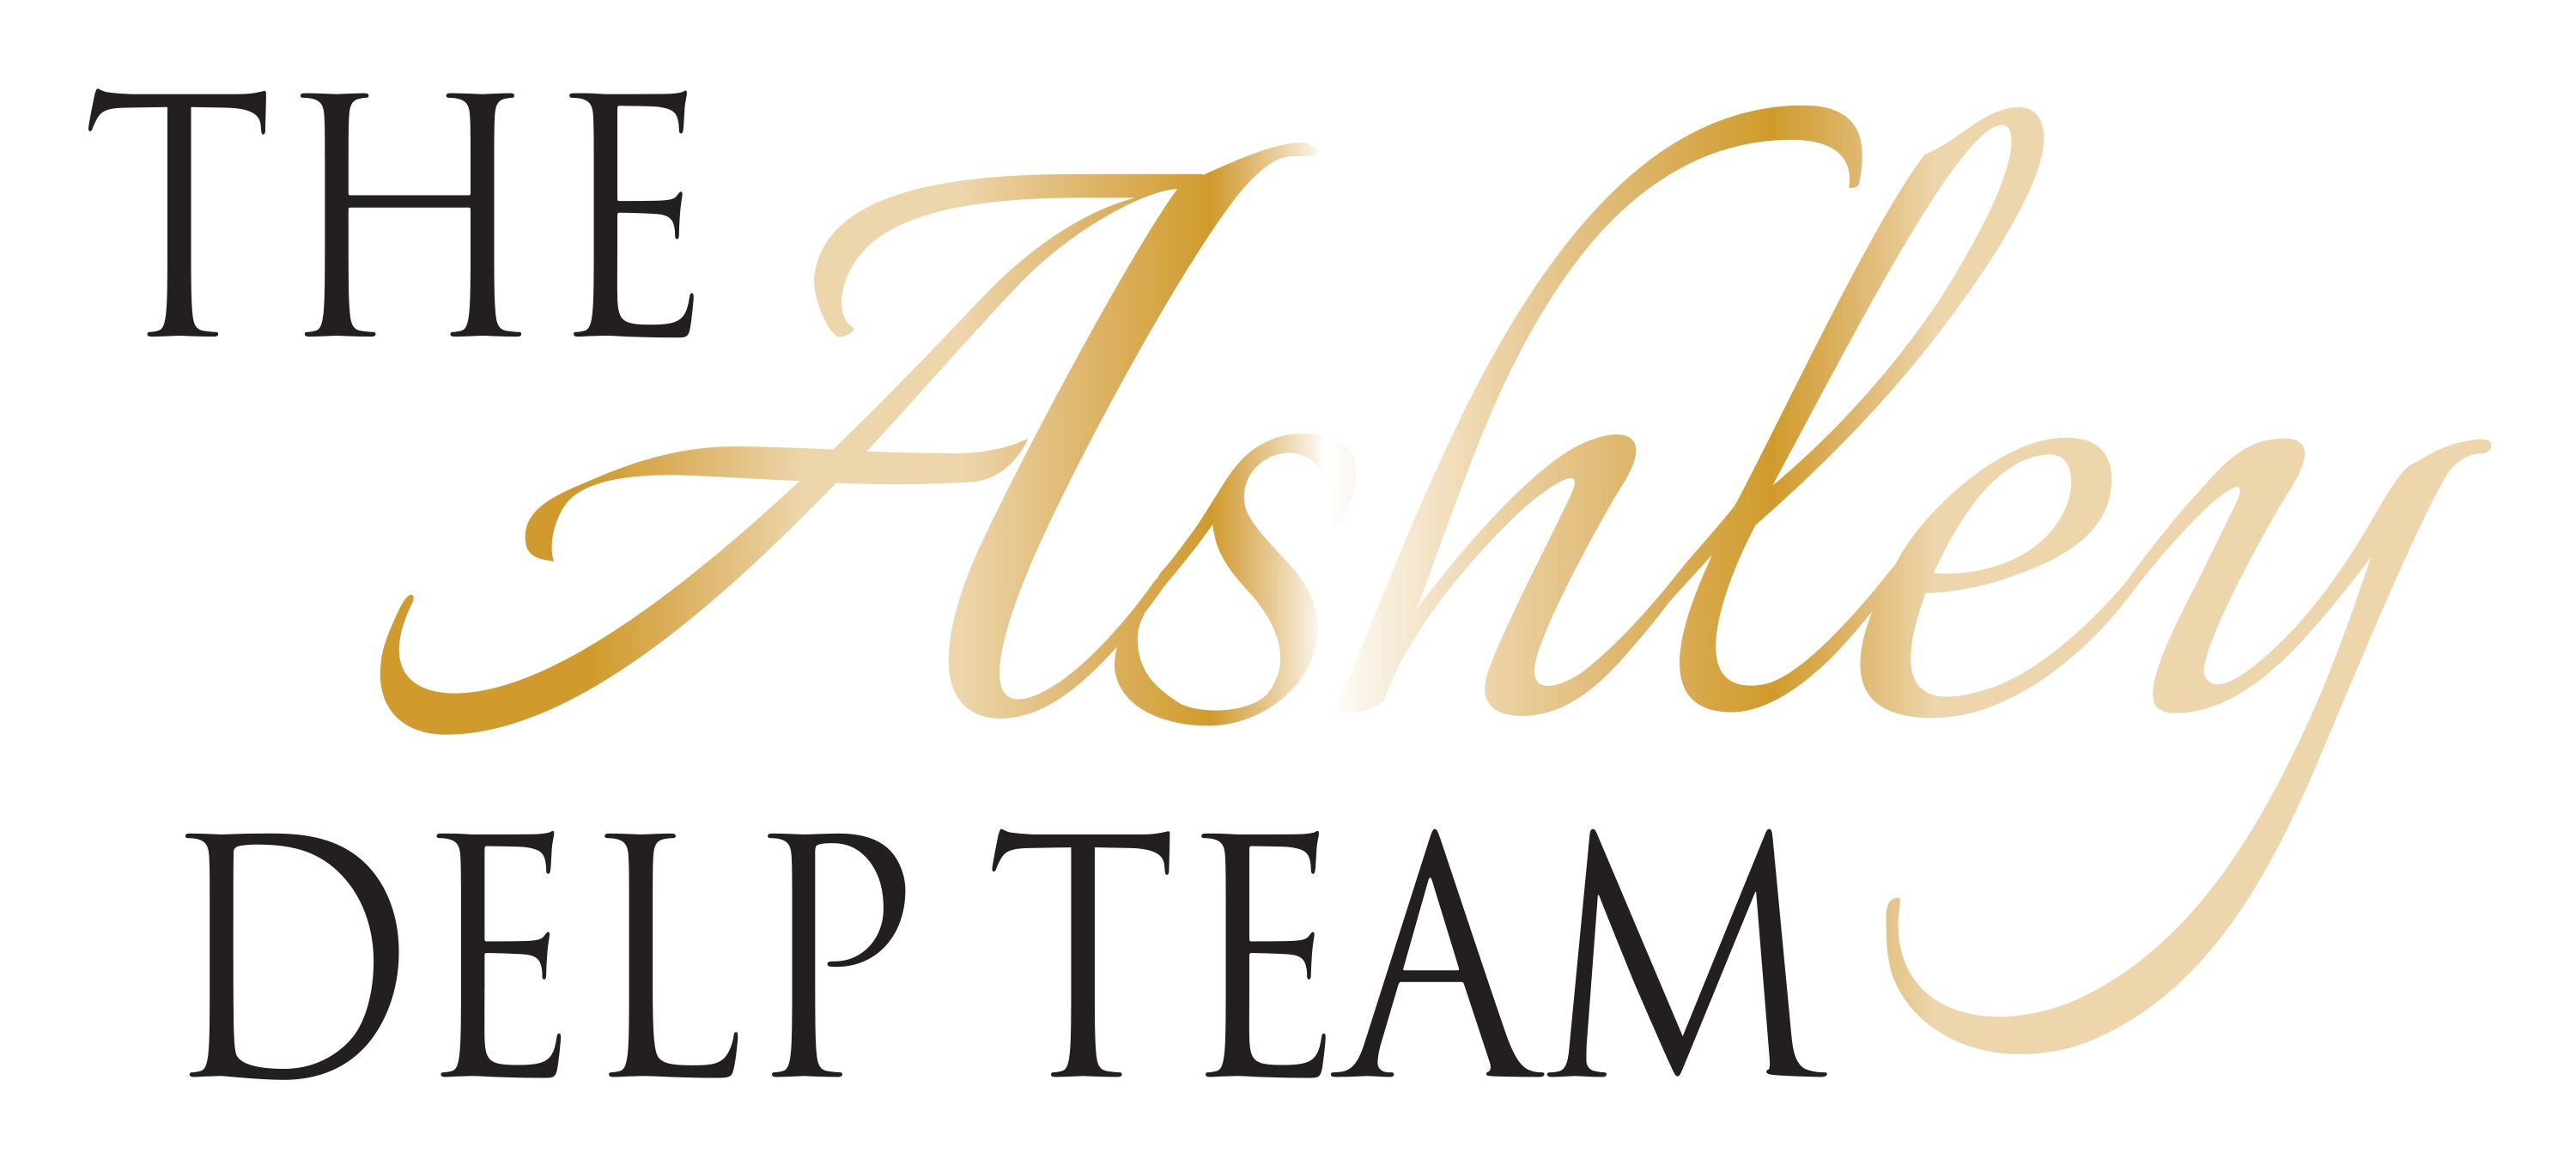 The Ashley Delp Team has 4.9 stars on SoTellUs